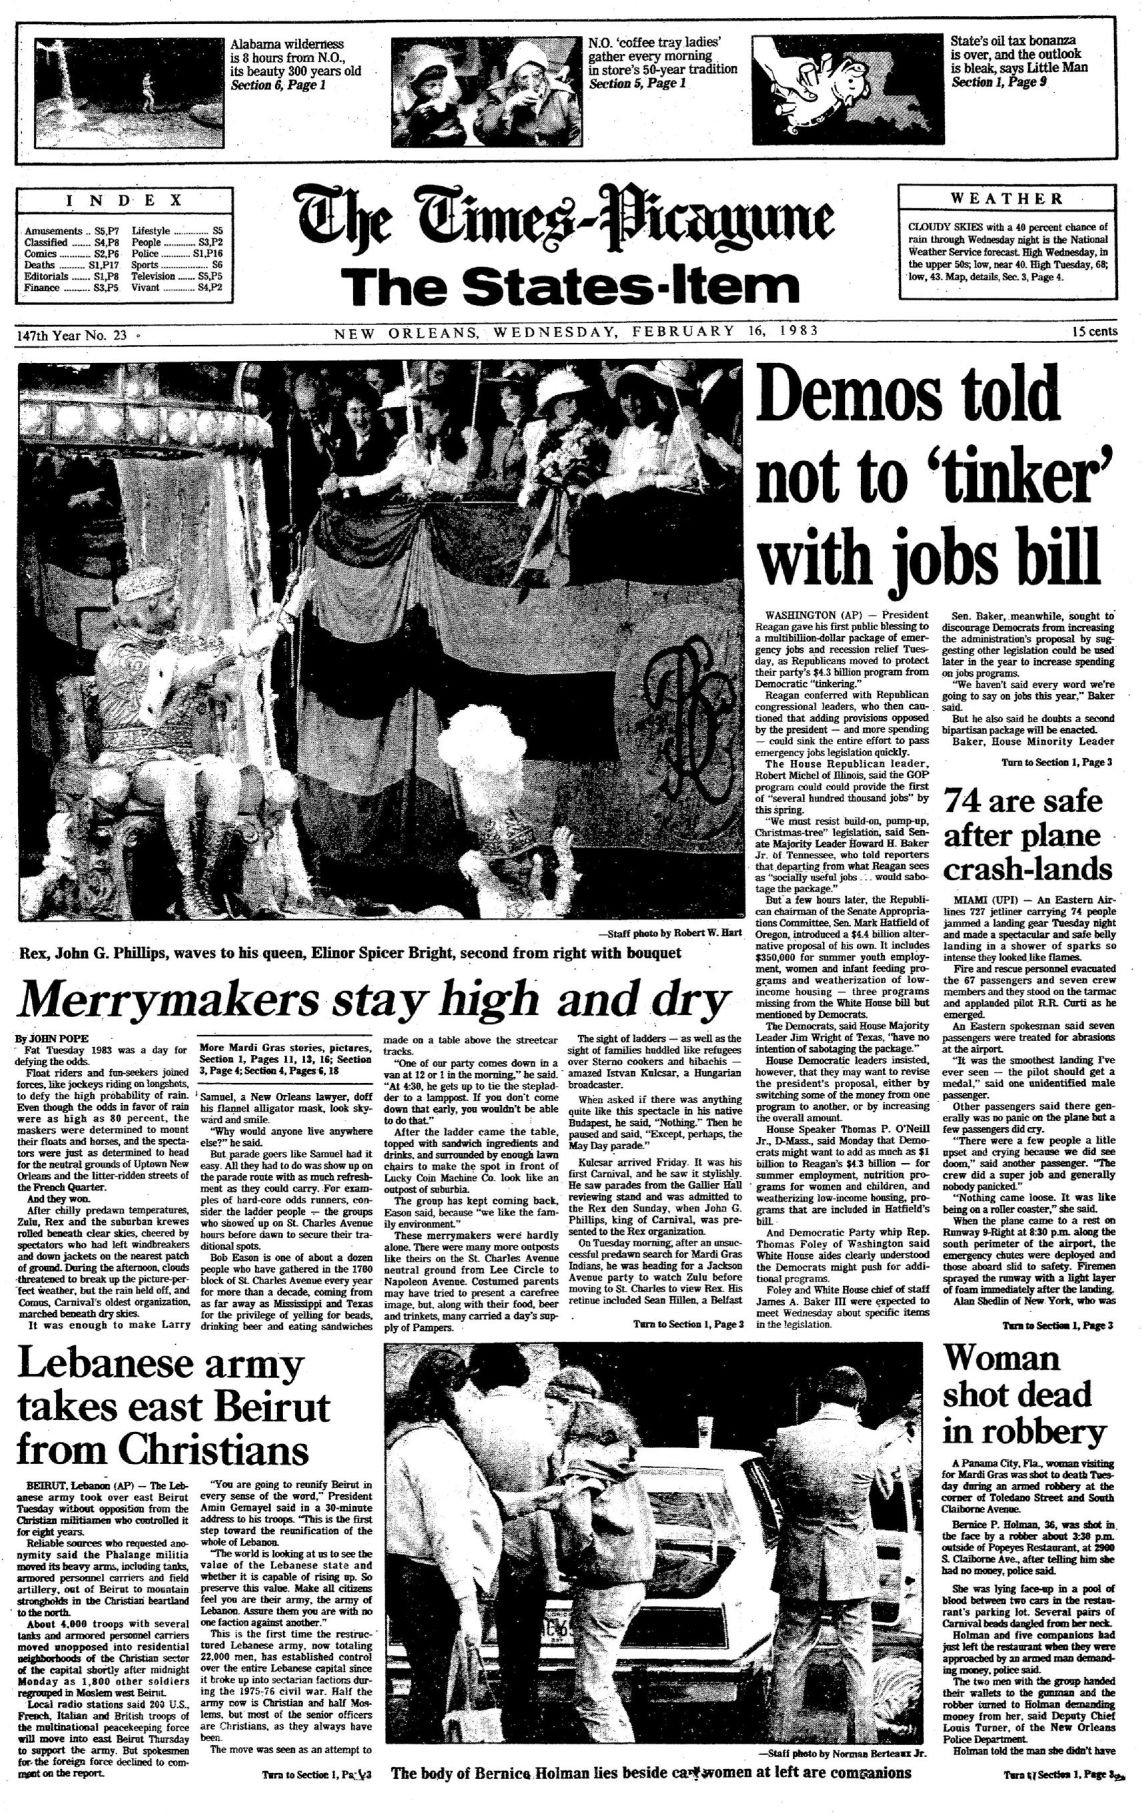 09 Times-Picayune State-Item newspaper 1983.pdf